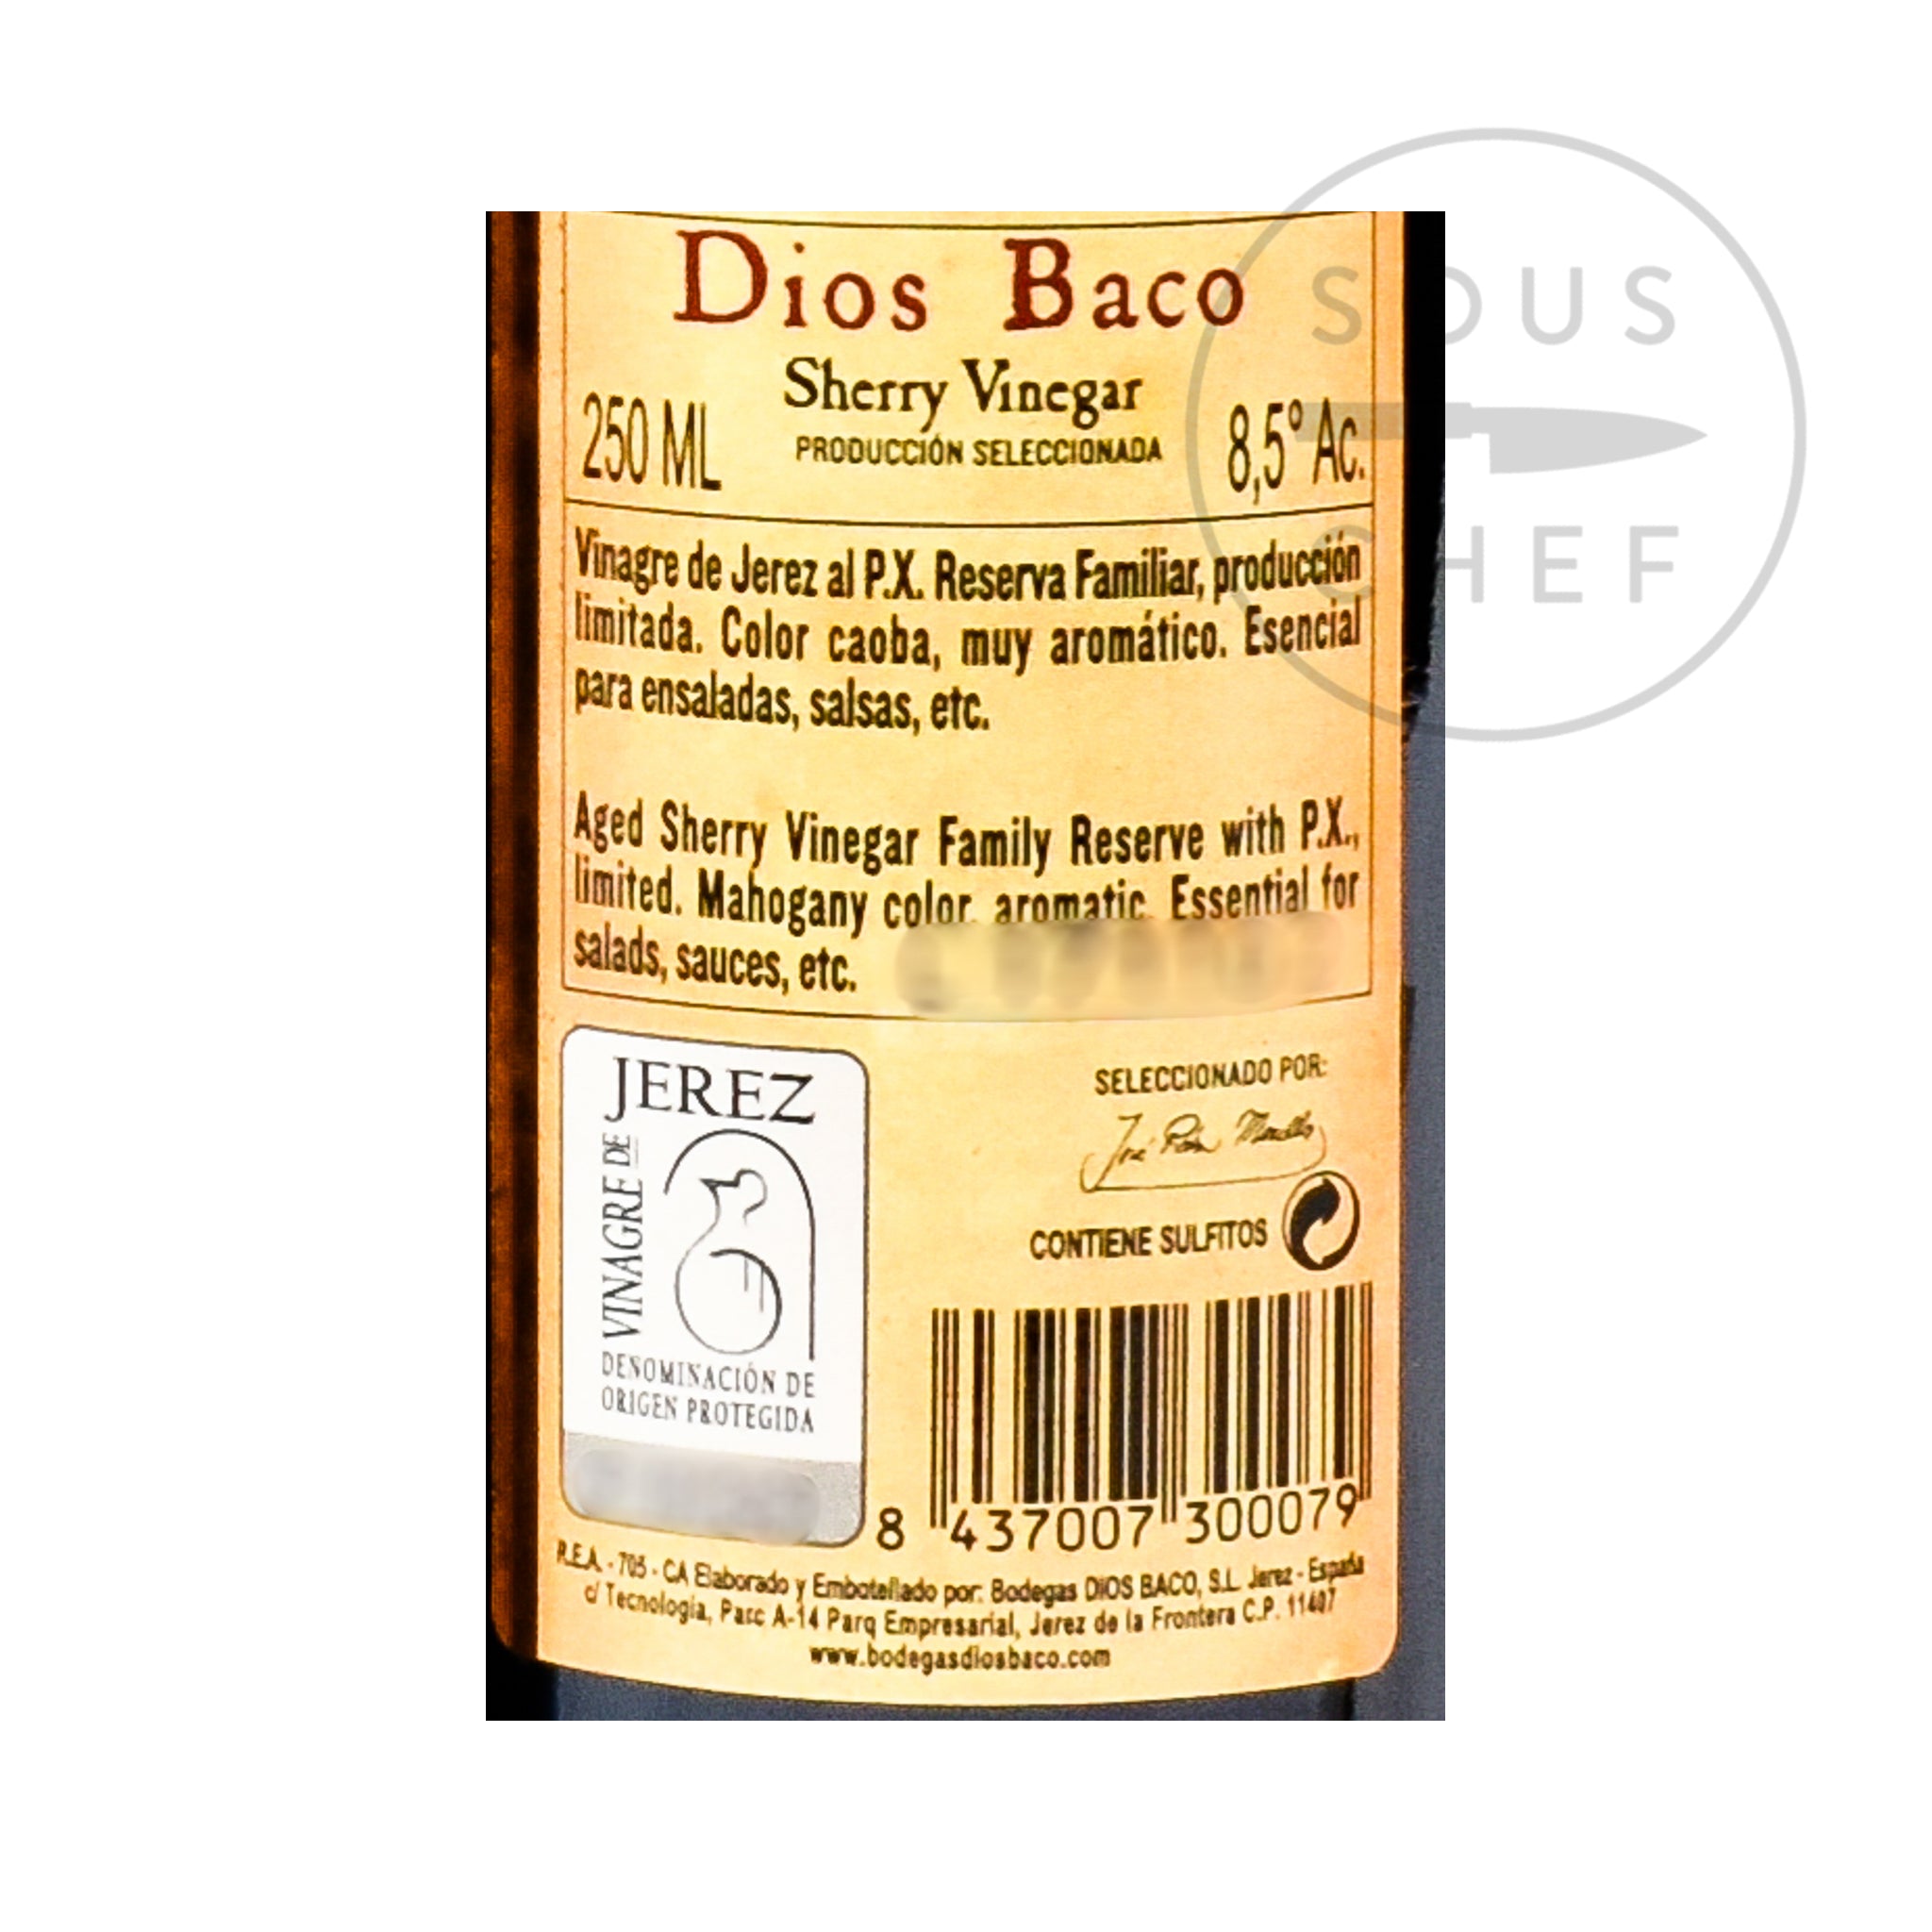 Dios Baco Sherry Vinegar With Pedro Ximenez, 250ml